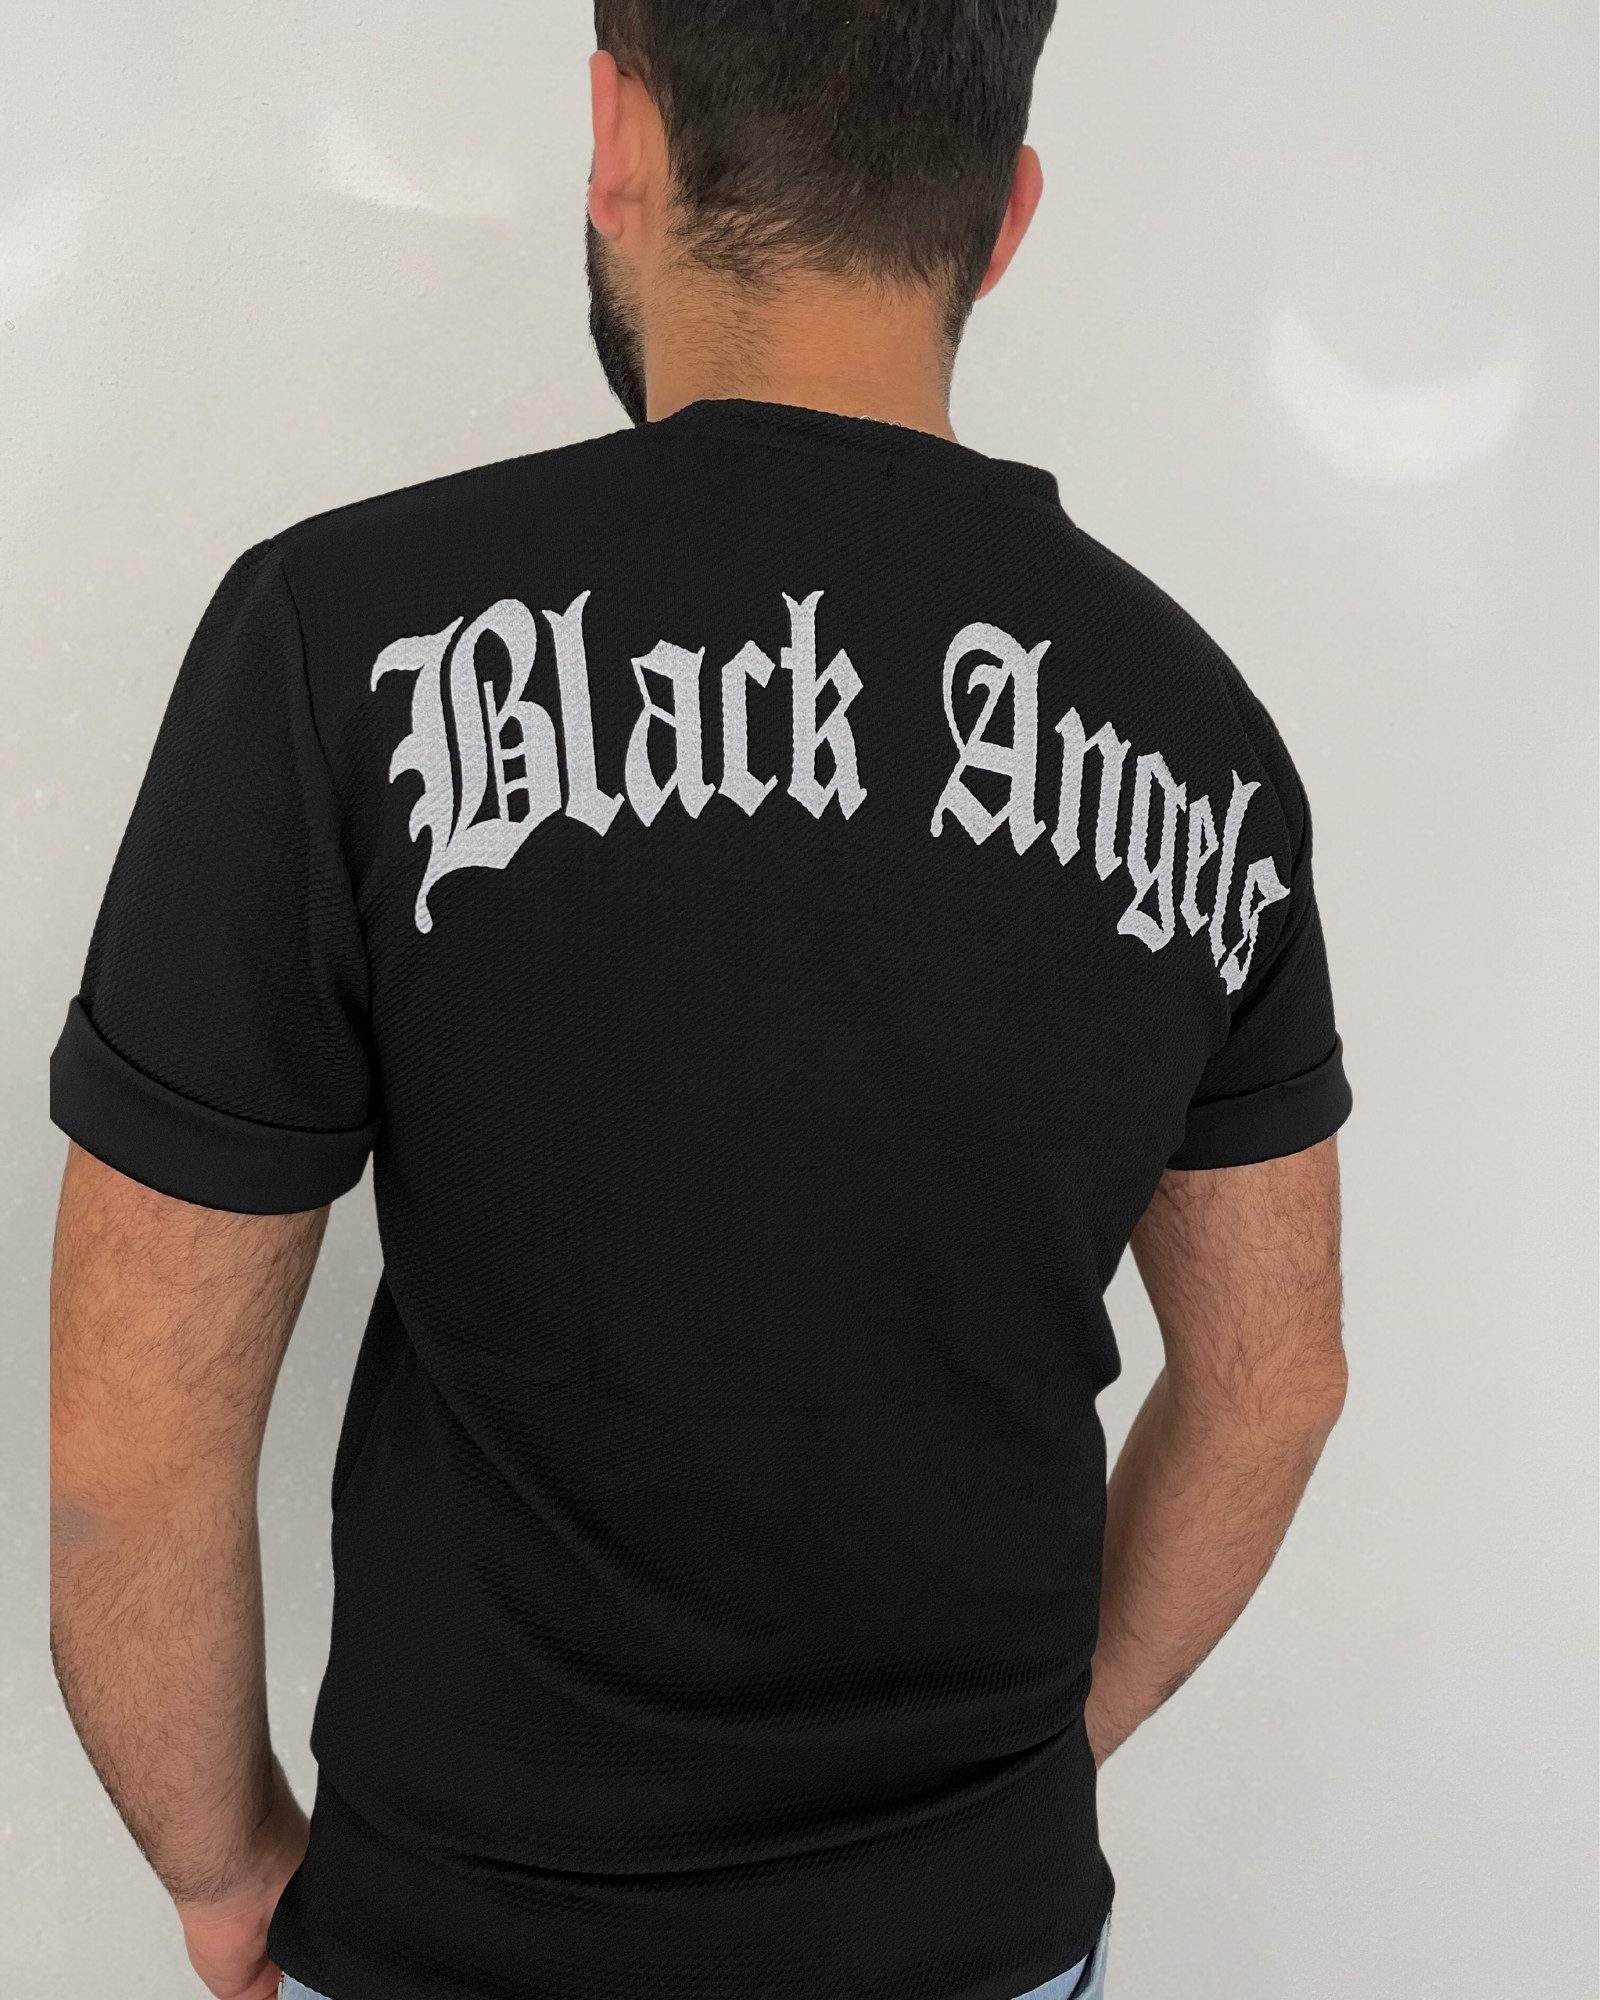 ITALY VIBES T-Shirt - ALEJANDRO - Shirt kurzarm - Backprint Black Angels - Erhältlich in Größe XS - XL